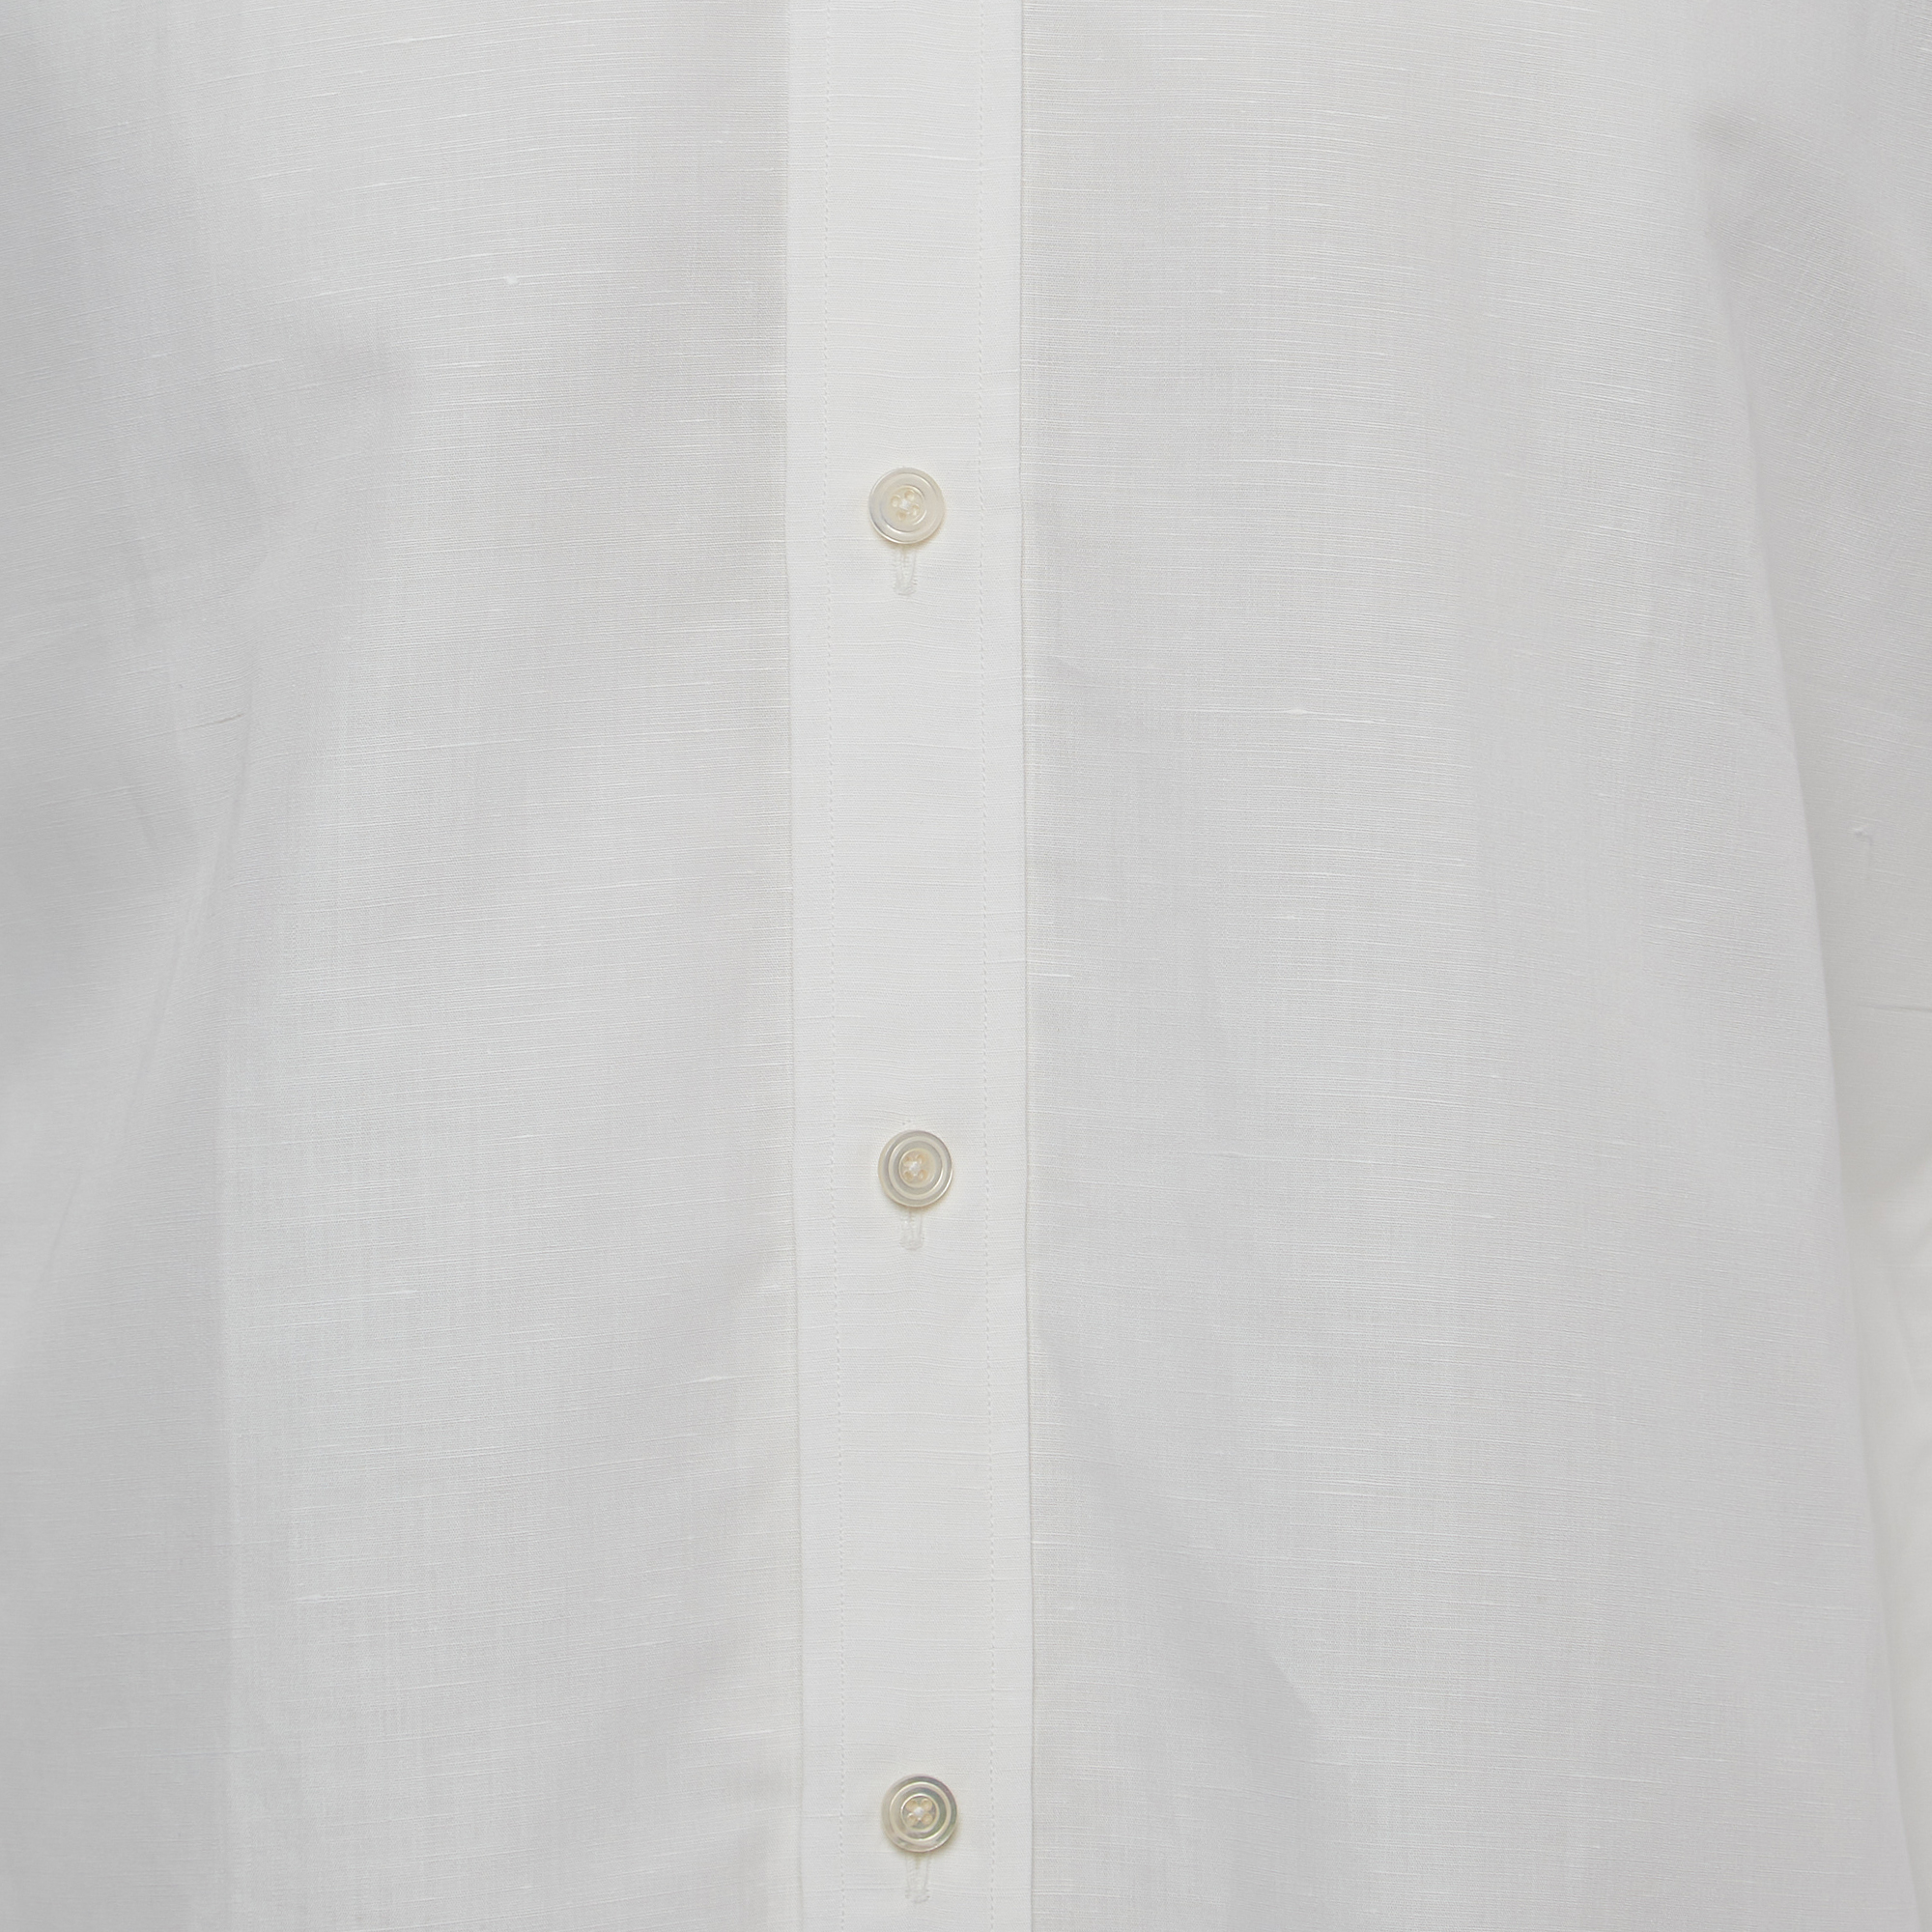 Tom Ford White Cotton & Linen Long Sleeve Shirt M